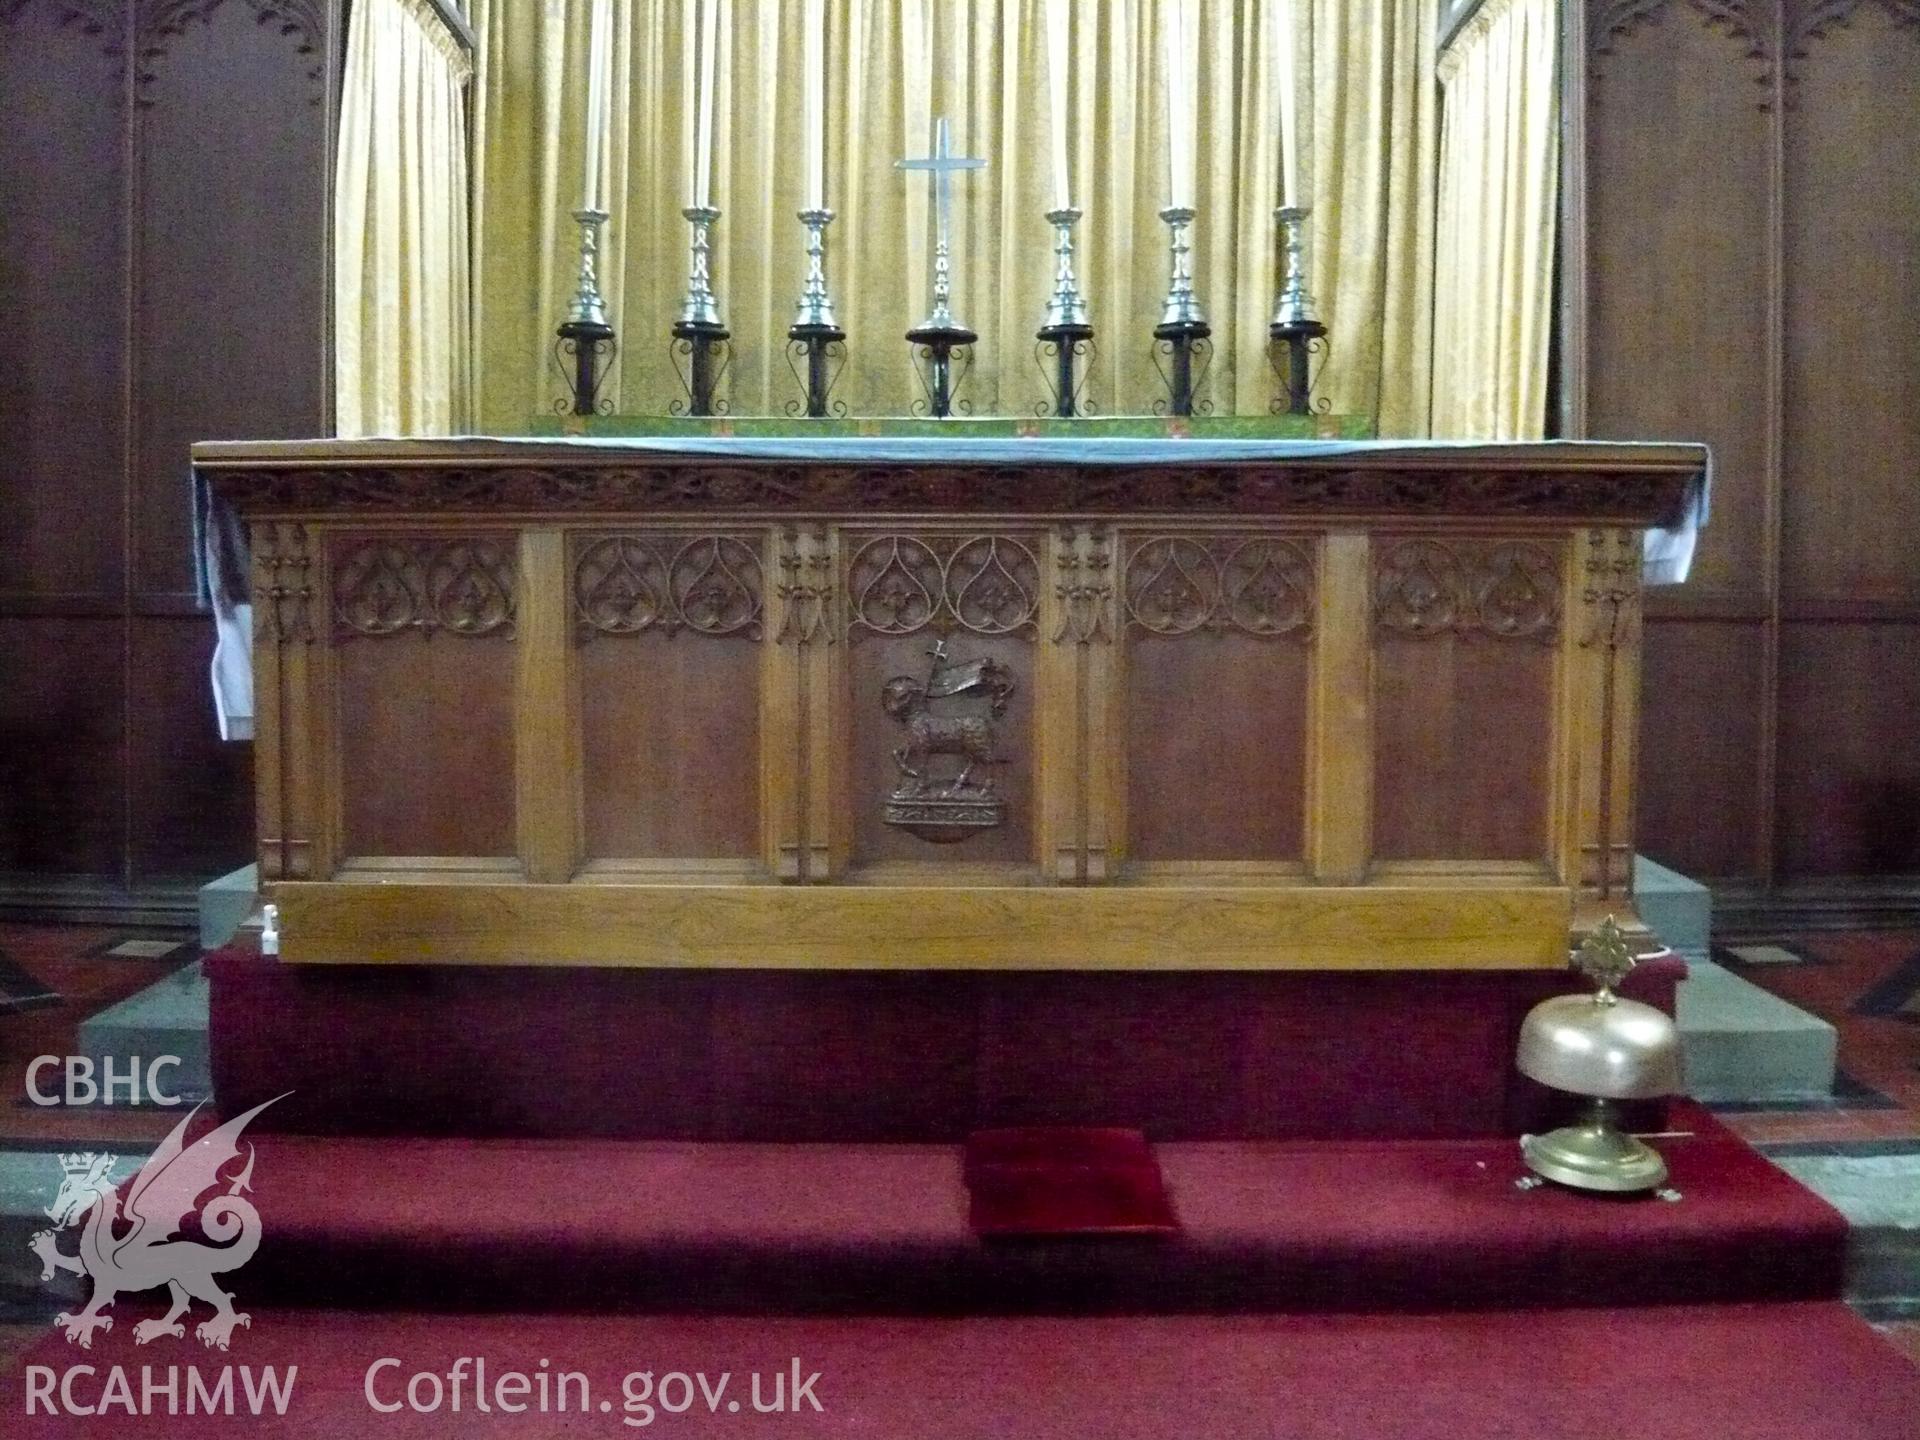 Colour photo showing the High Altar at St Paul's Church, Grangetown, taken by Revd David T. Morris, 2018.